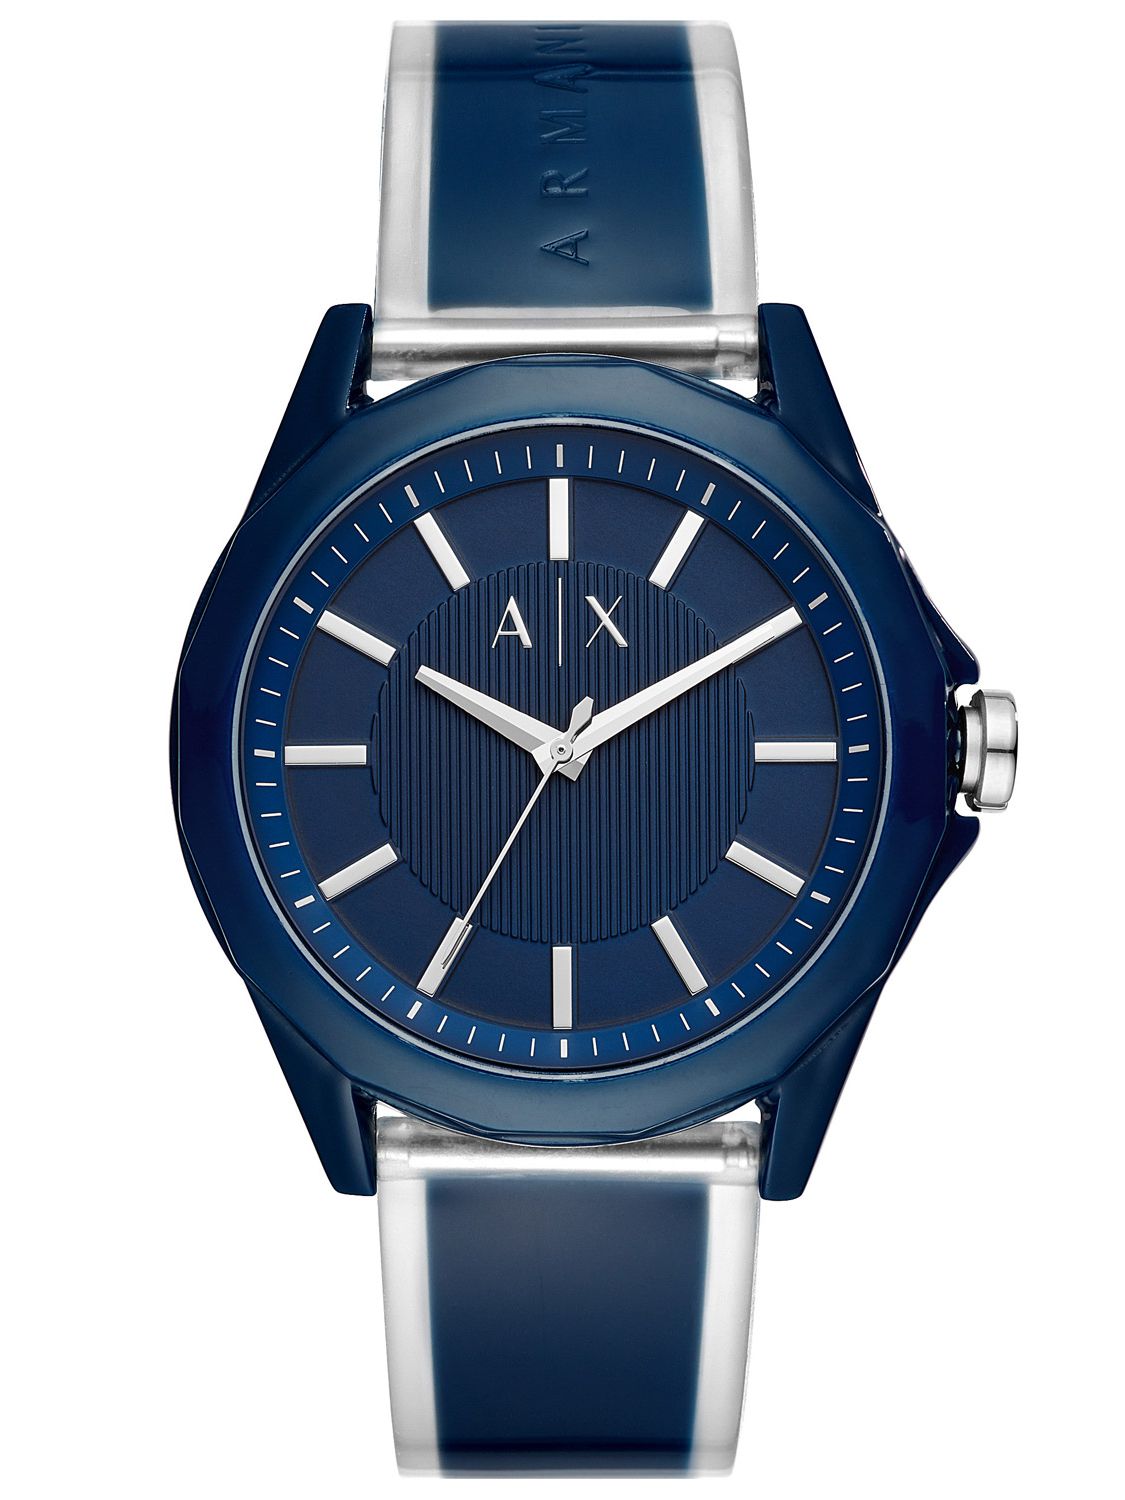 armani exchange wrist watch